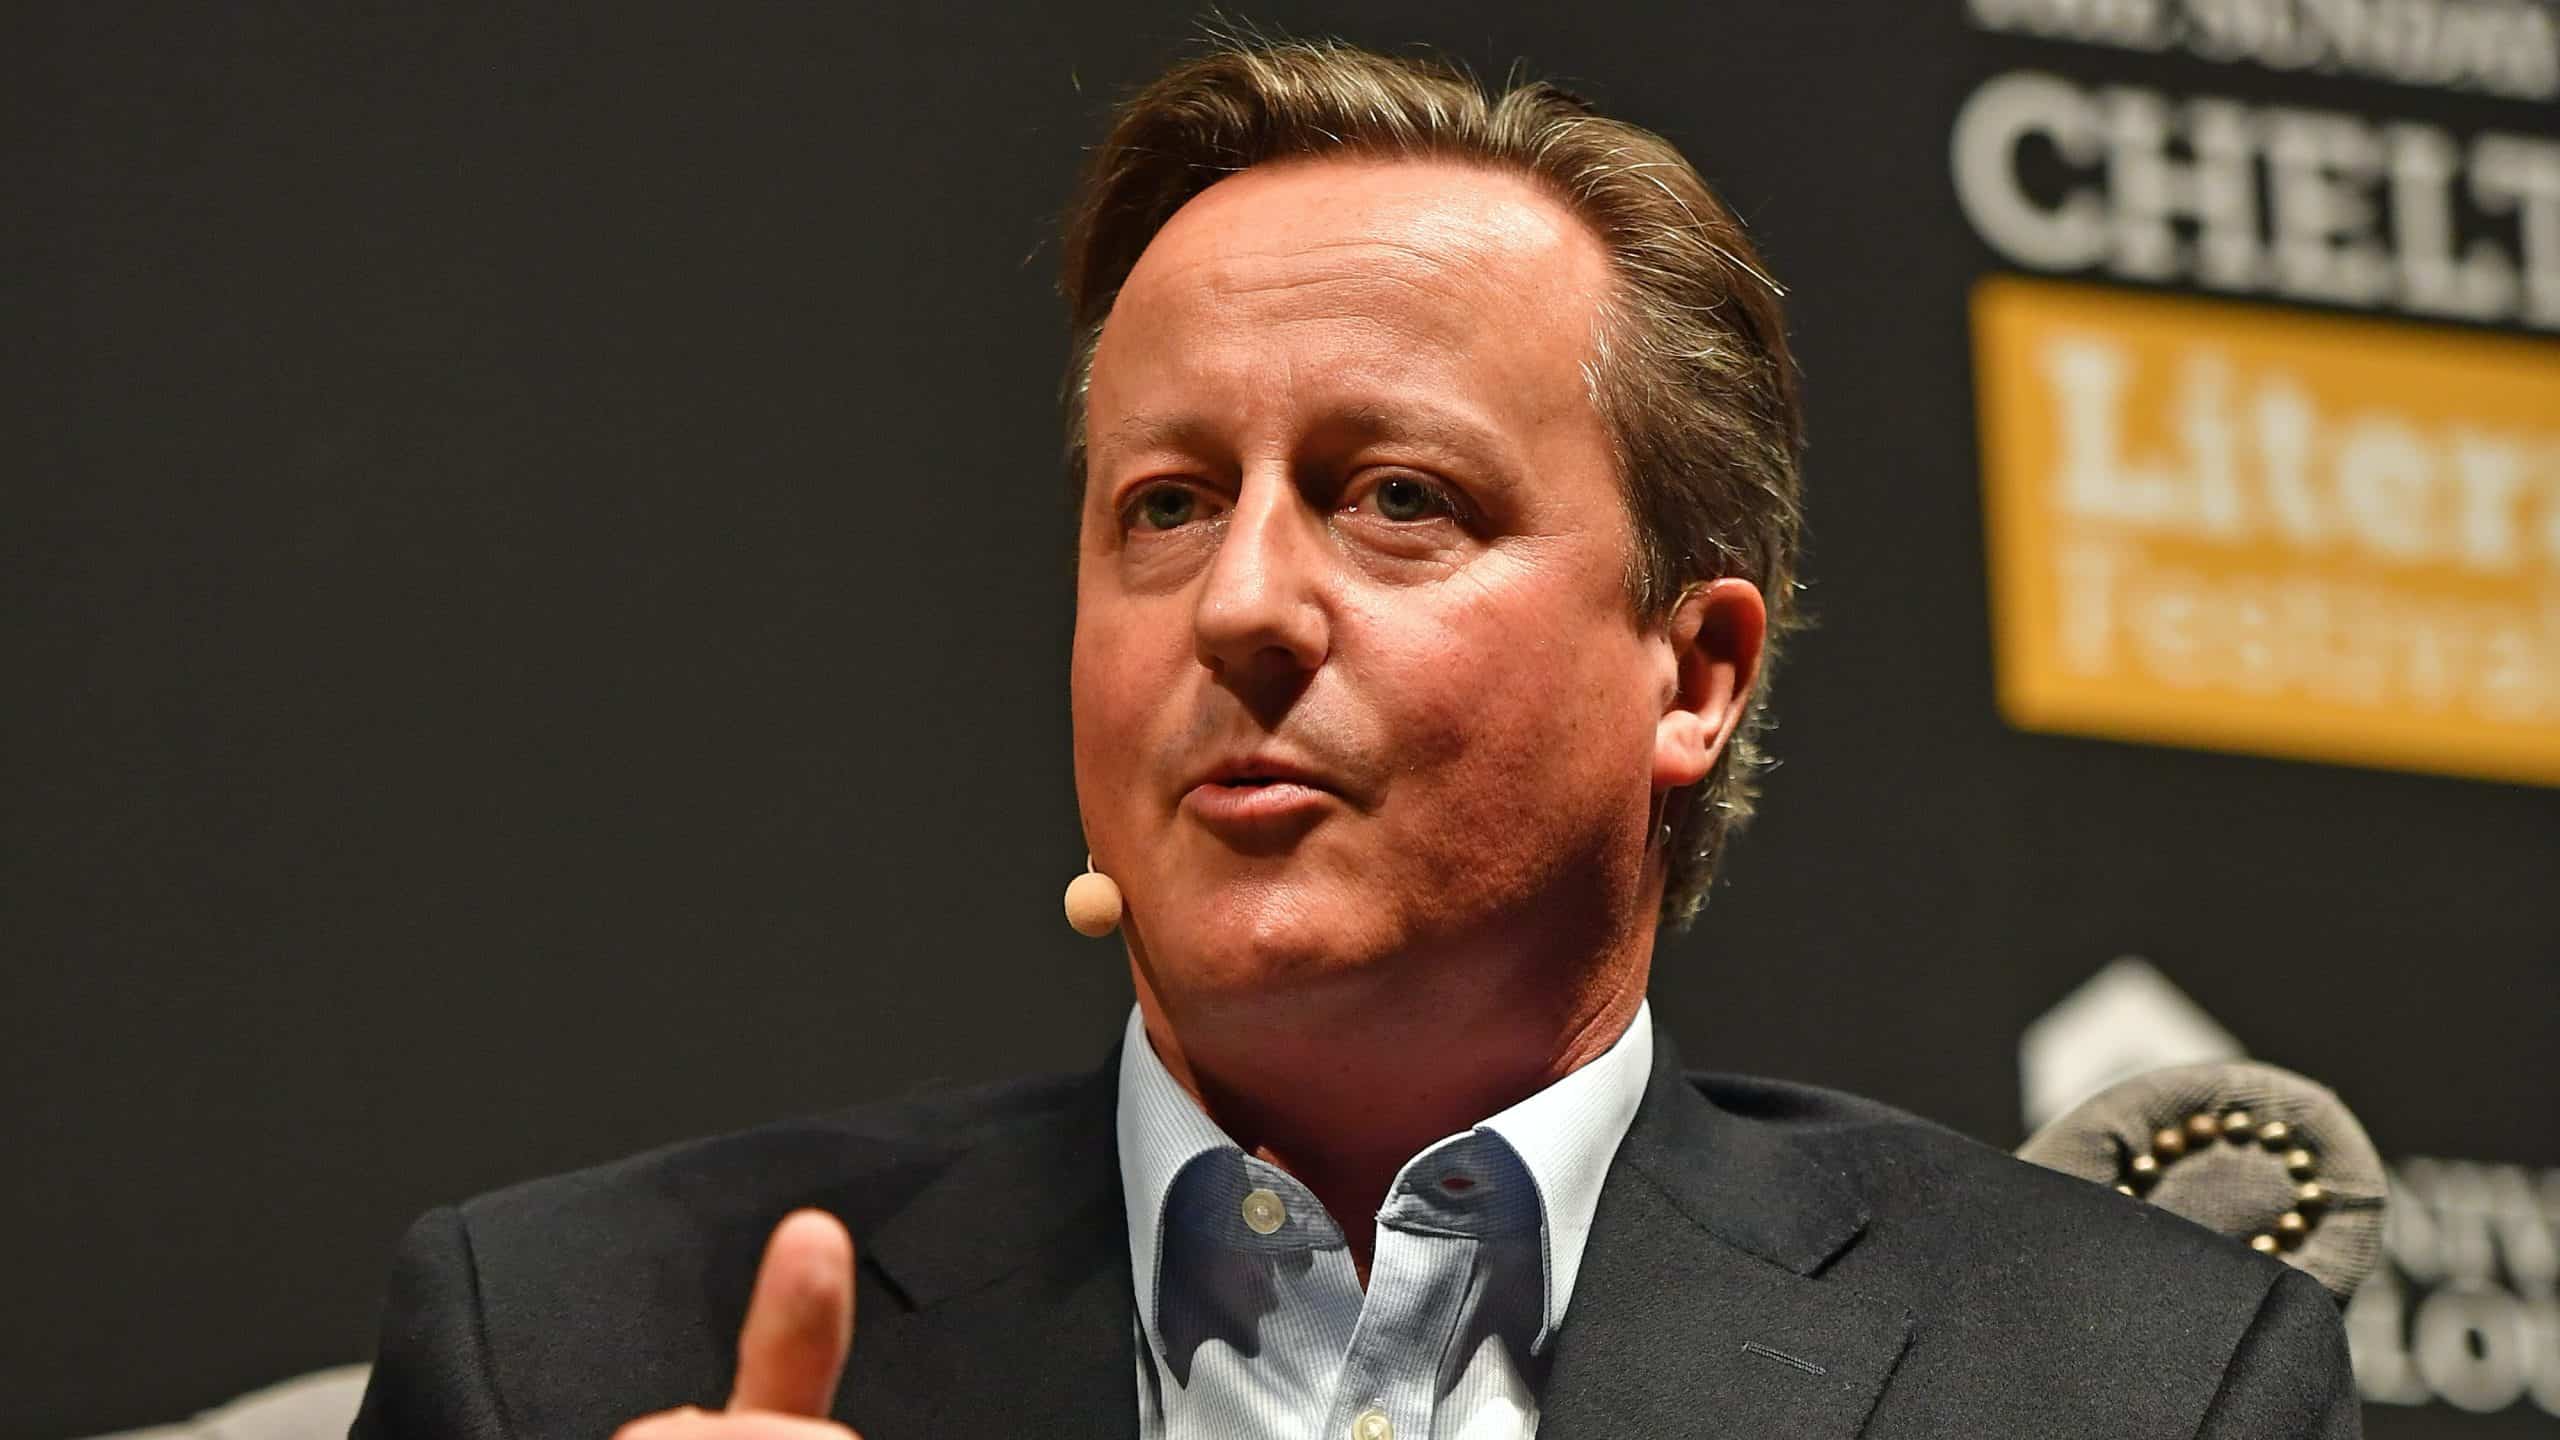 David Cameron says austerity prepared UK to tackle Covid-19